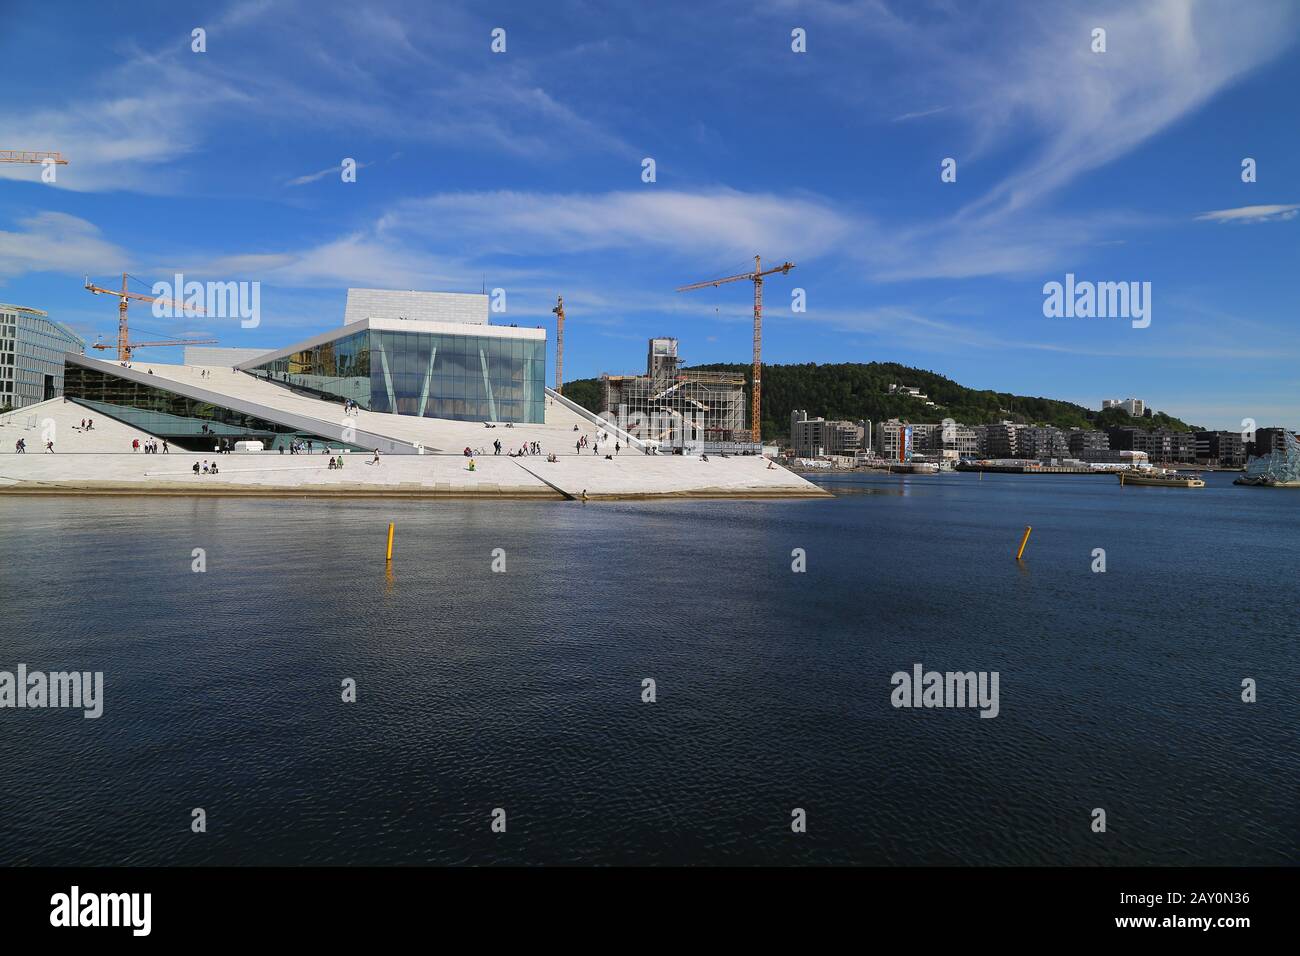 Tourists exploring Oslo Opera House, Norway Stock Photo